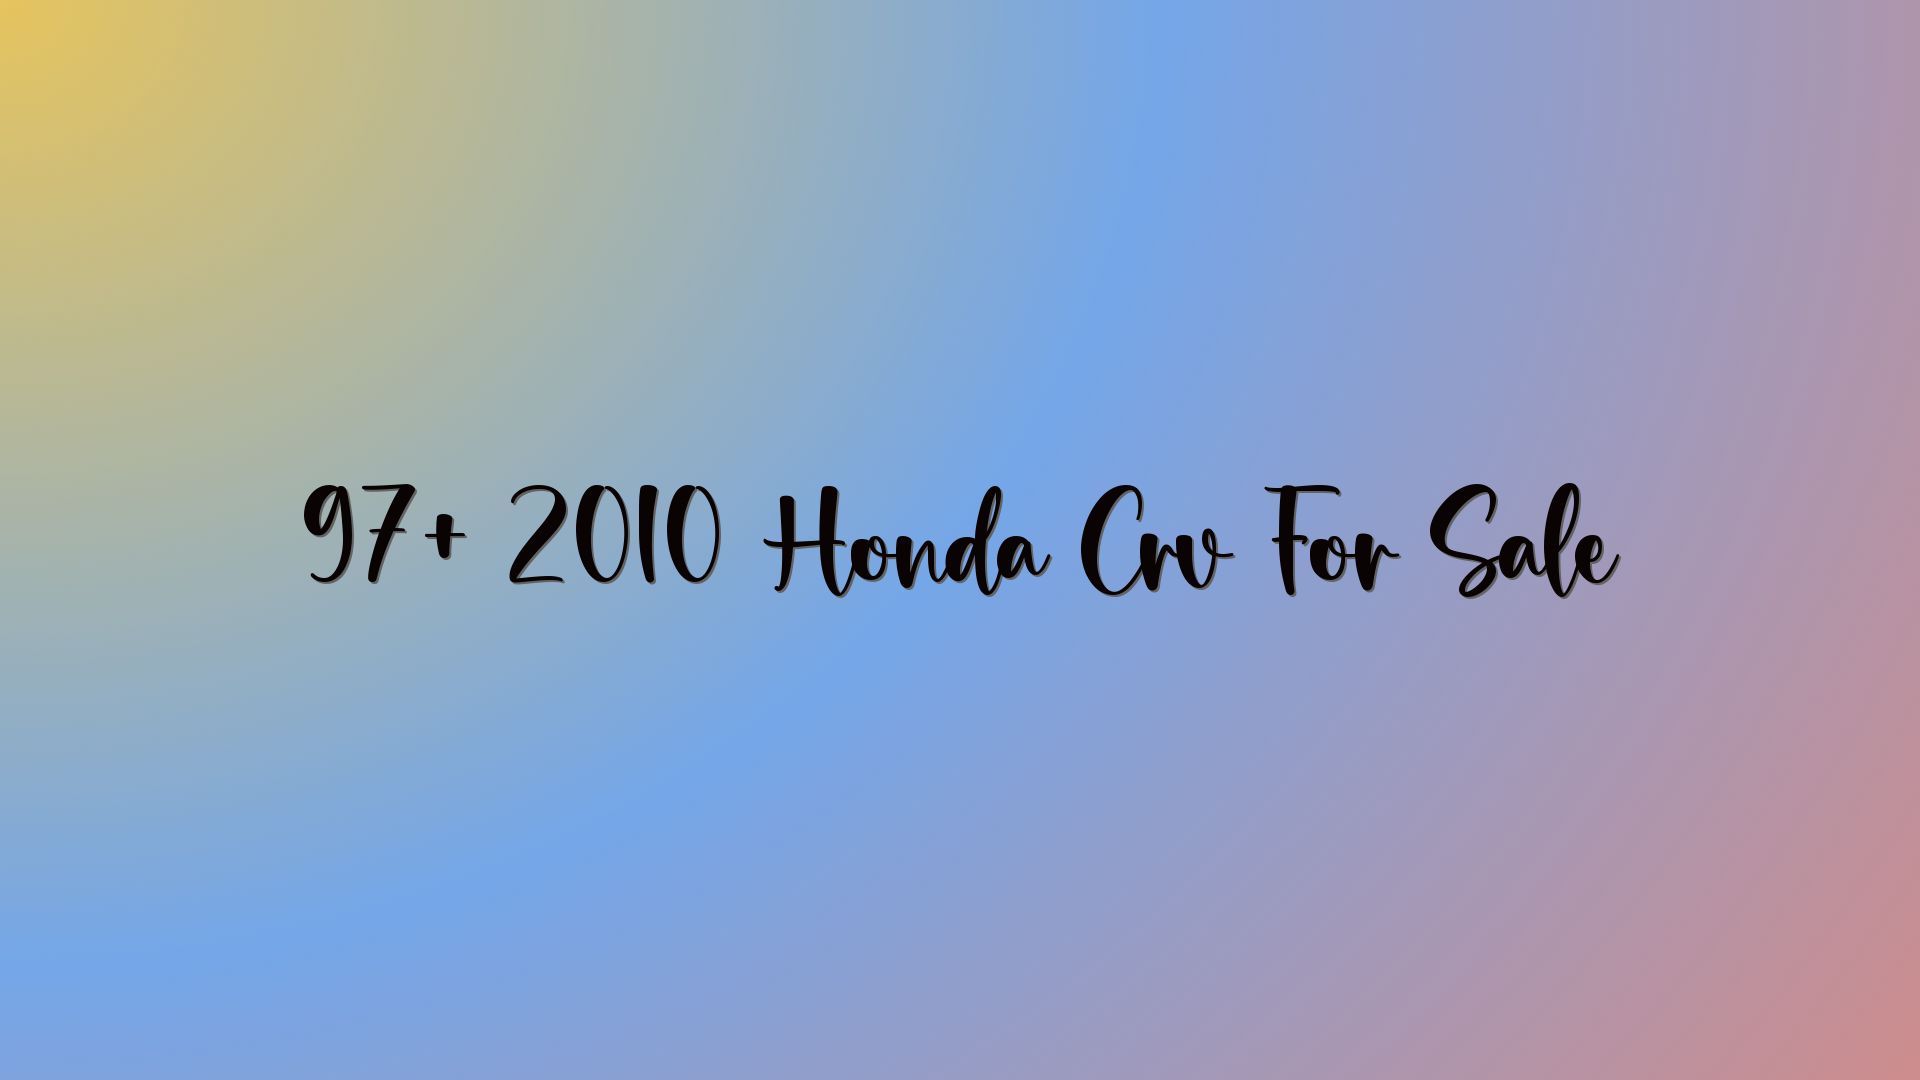 97+ 2010 Honda Crv For Sale